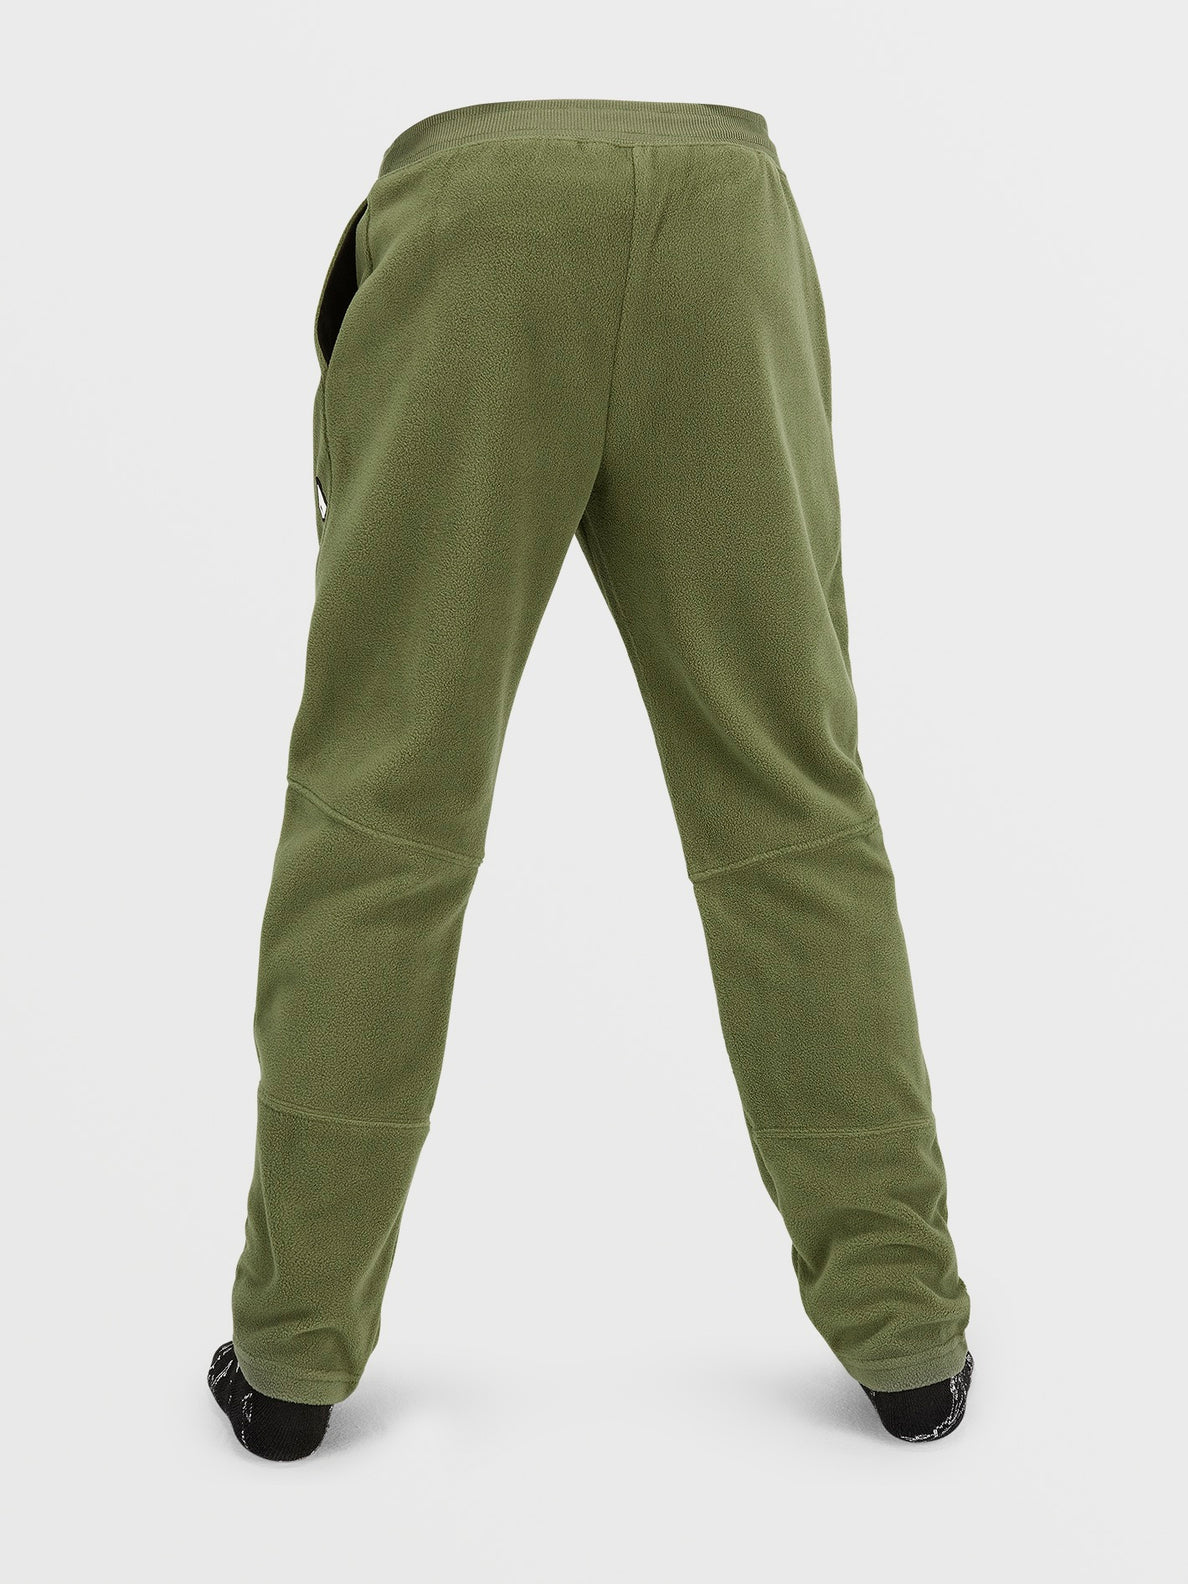 Polar Fleece Pants Mens Sports Outdoor Warm Green Pants Boys Thick